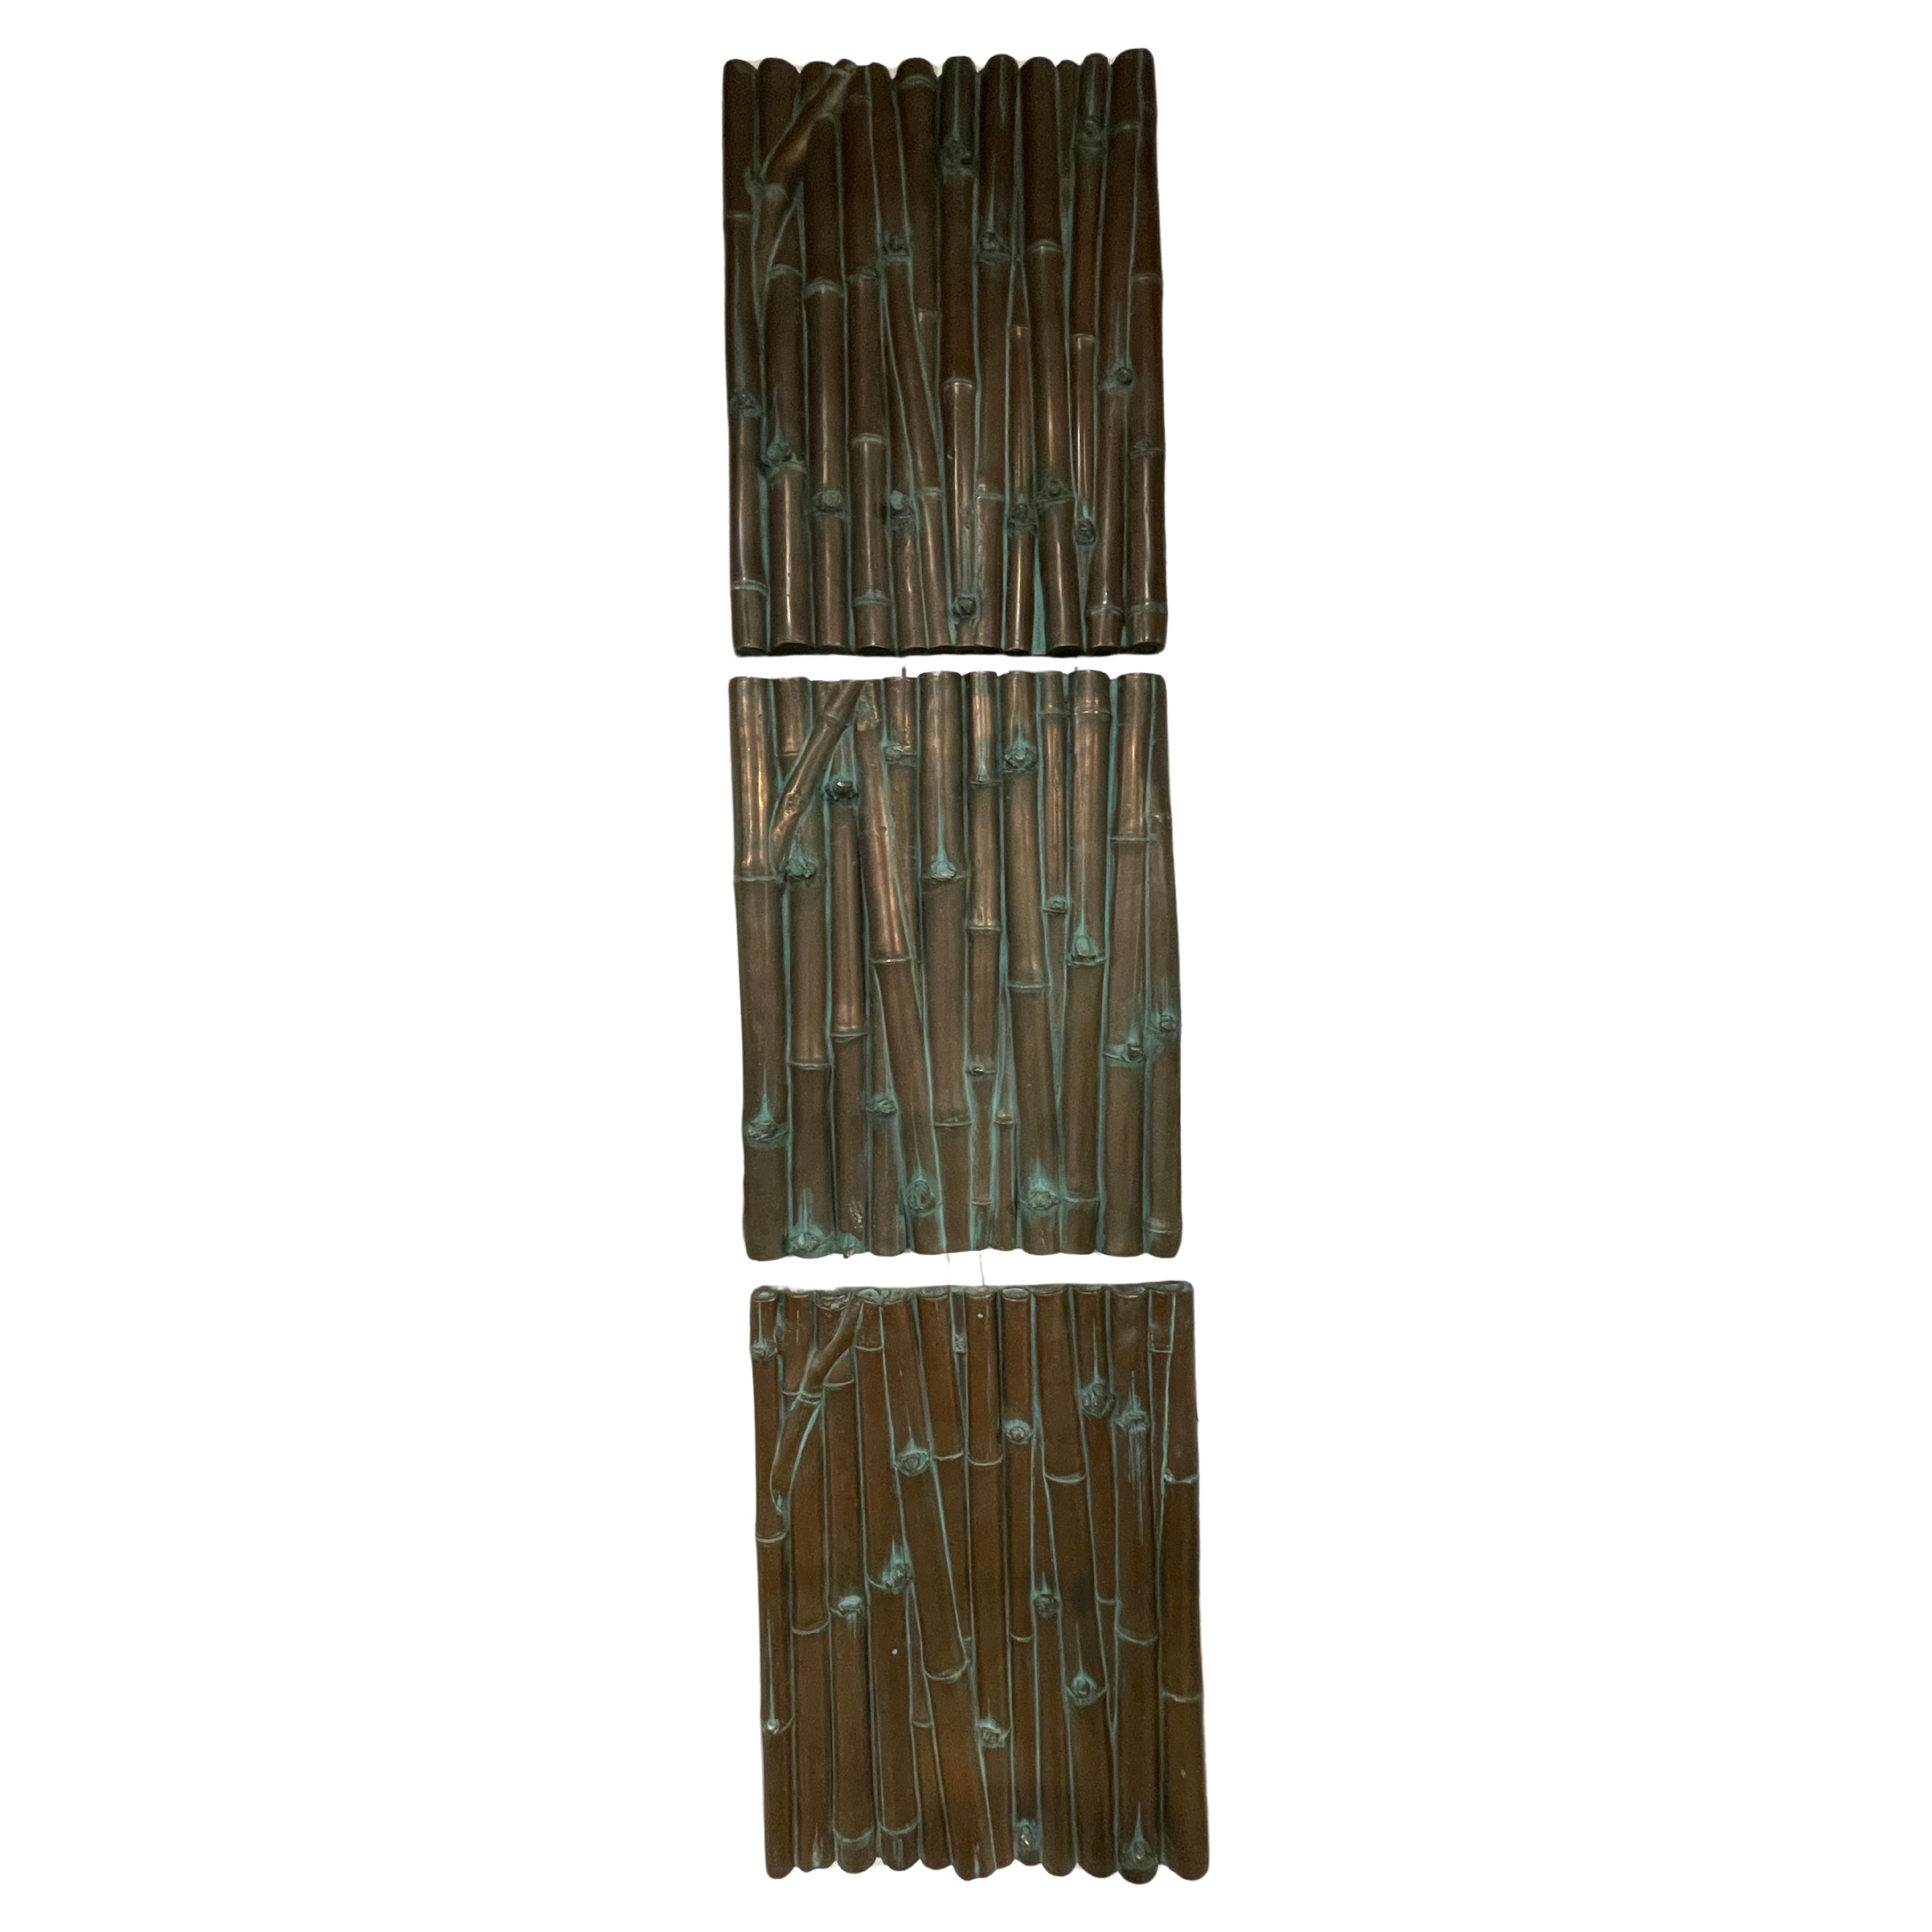 Three Bronze Clad Bamboo Relief Wall Panel Sculptures